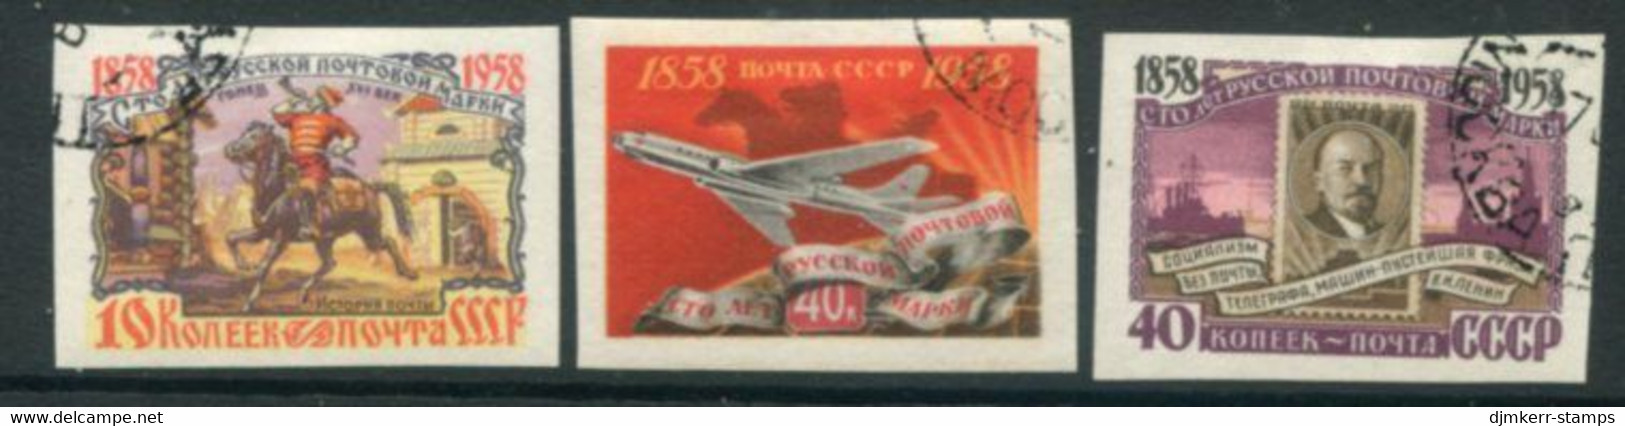 SOVIET UNION 1958 Russian Stamp Centenary Imperforate Used.  Michel 2114, 2118-19 B - Usati